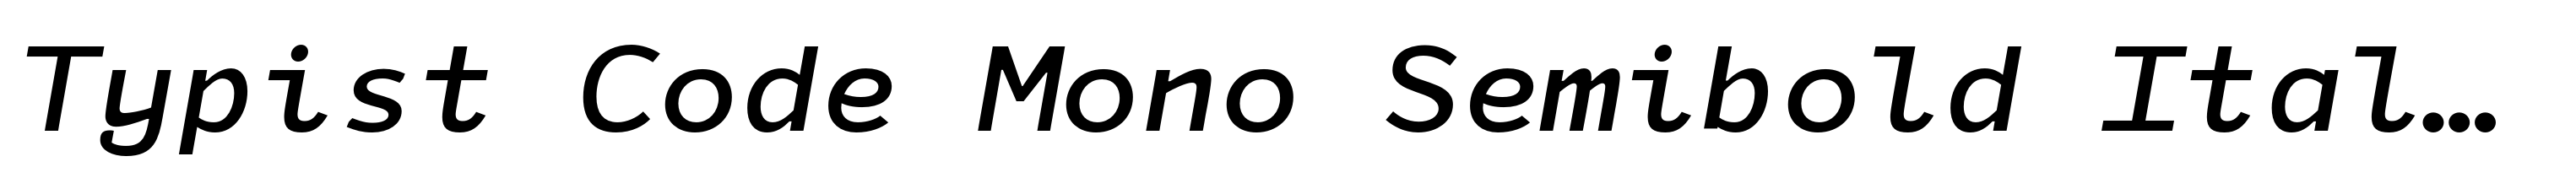 Typist Code Mono Semibold Italic